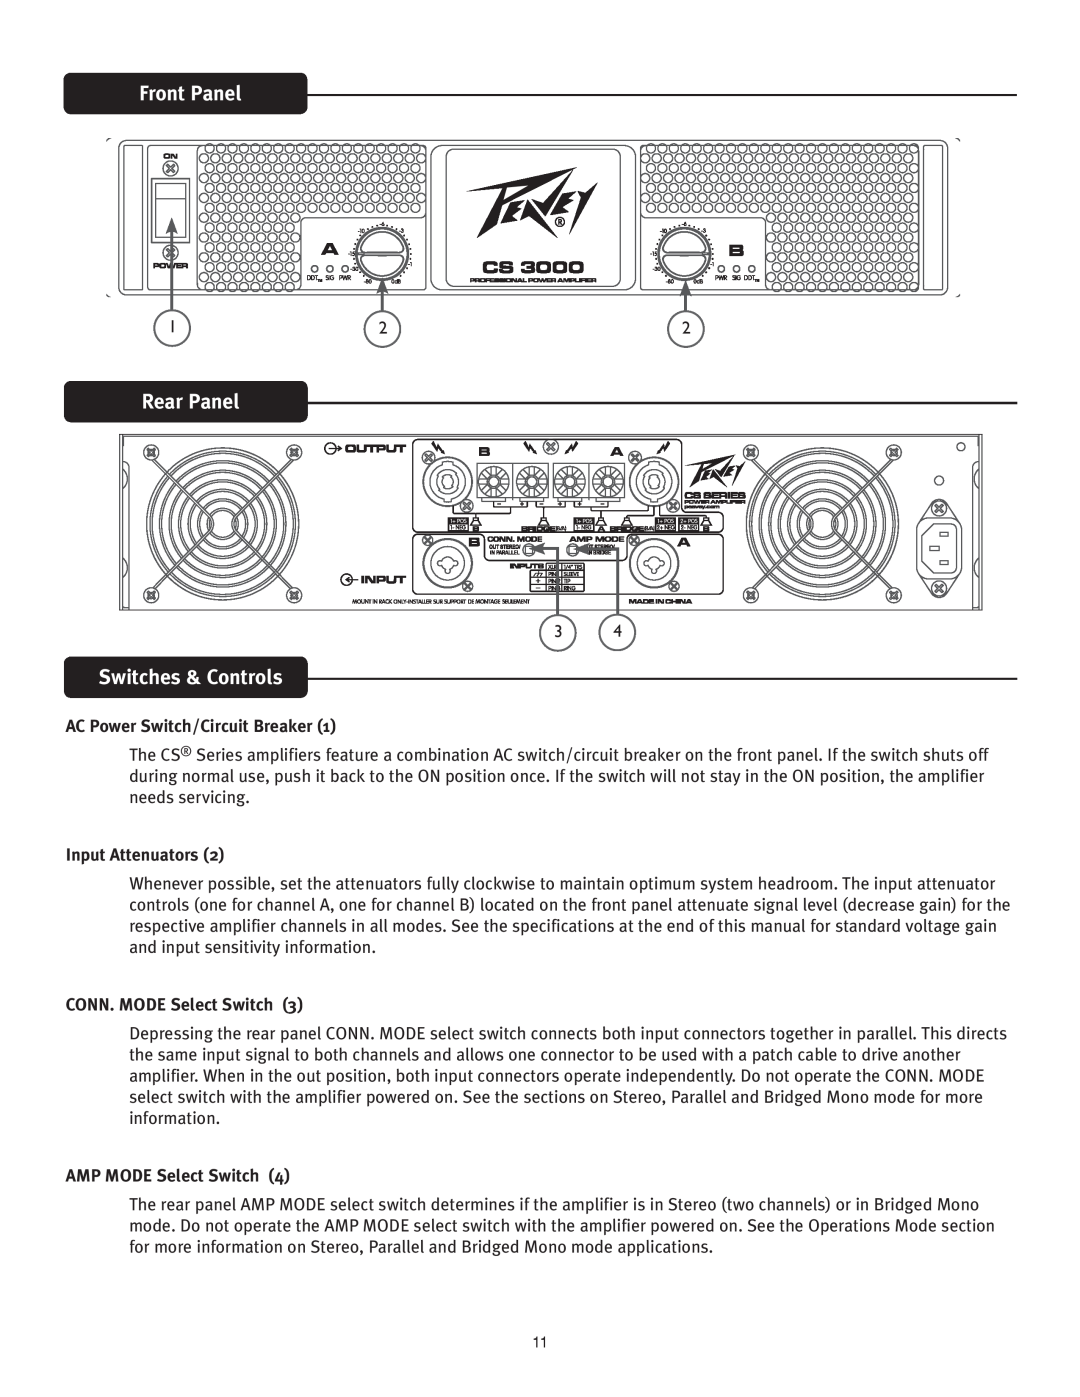 Peavey CS 4080 HZ Front Panel, Rear Panel, Switches & Controls, AC Power Switch/Circuit Breaker, Input Attenuators 